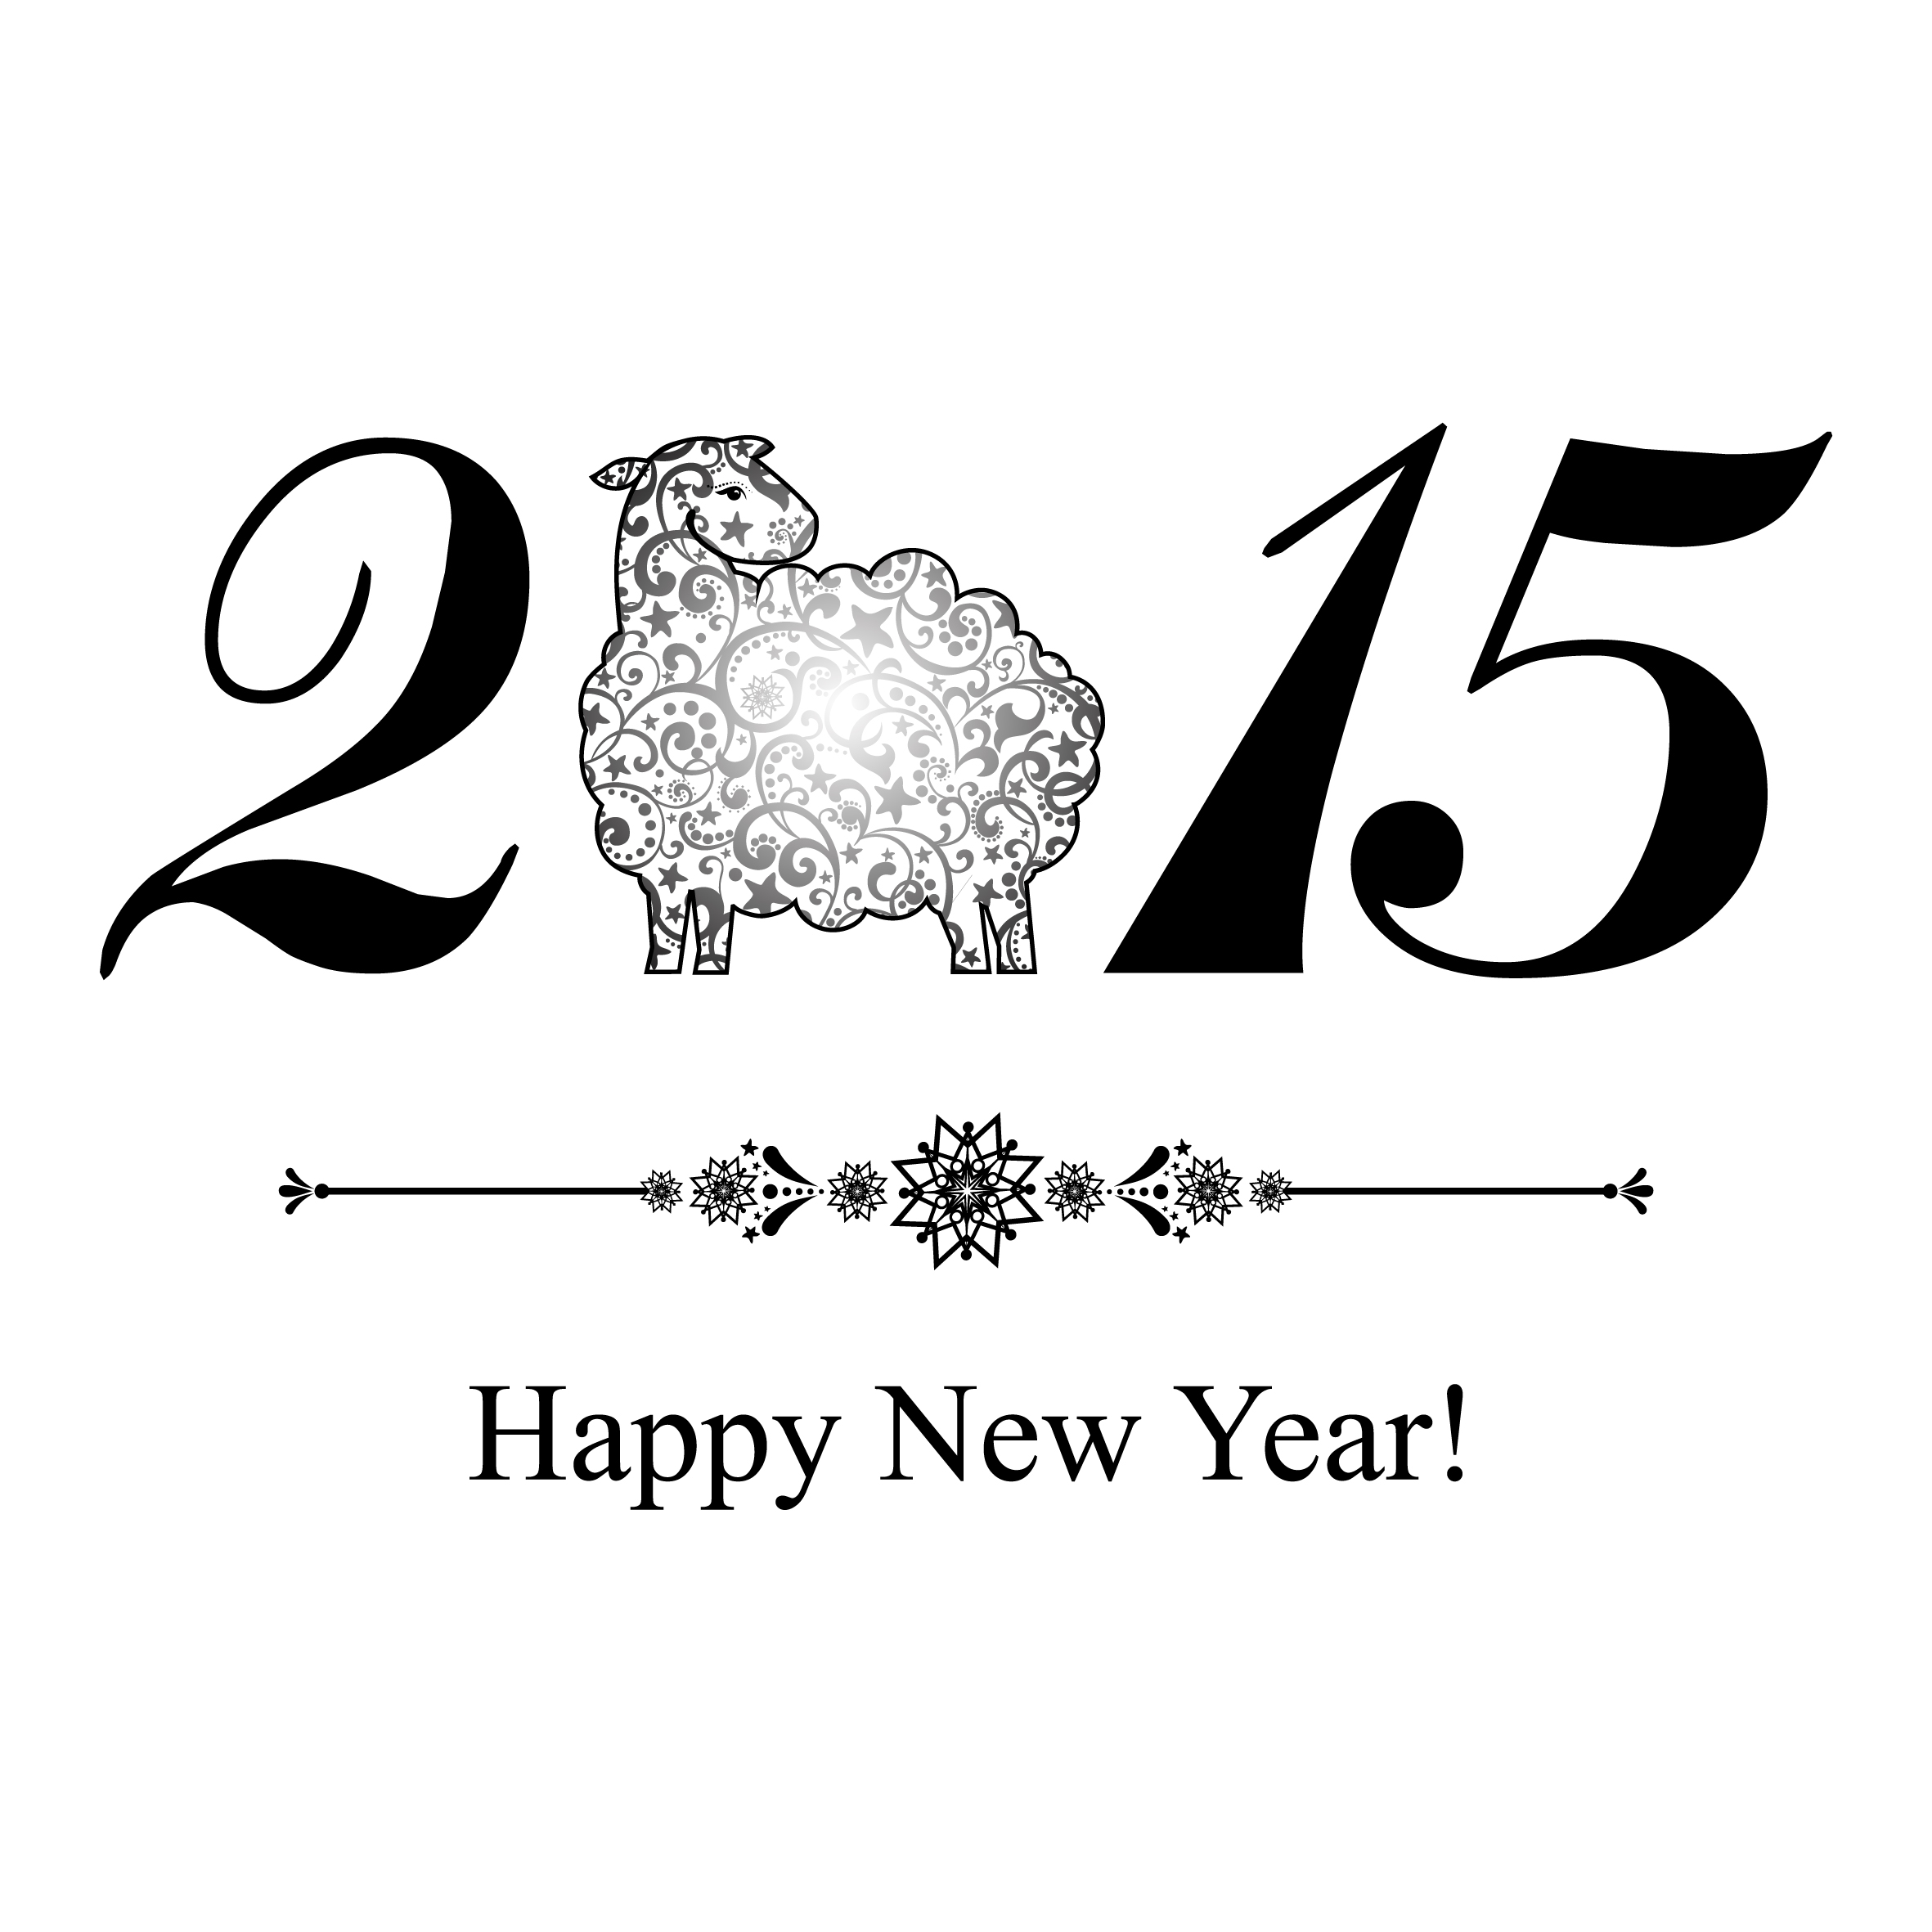 2015 sheep year background creative vector 04